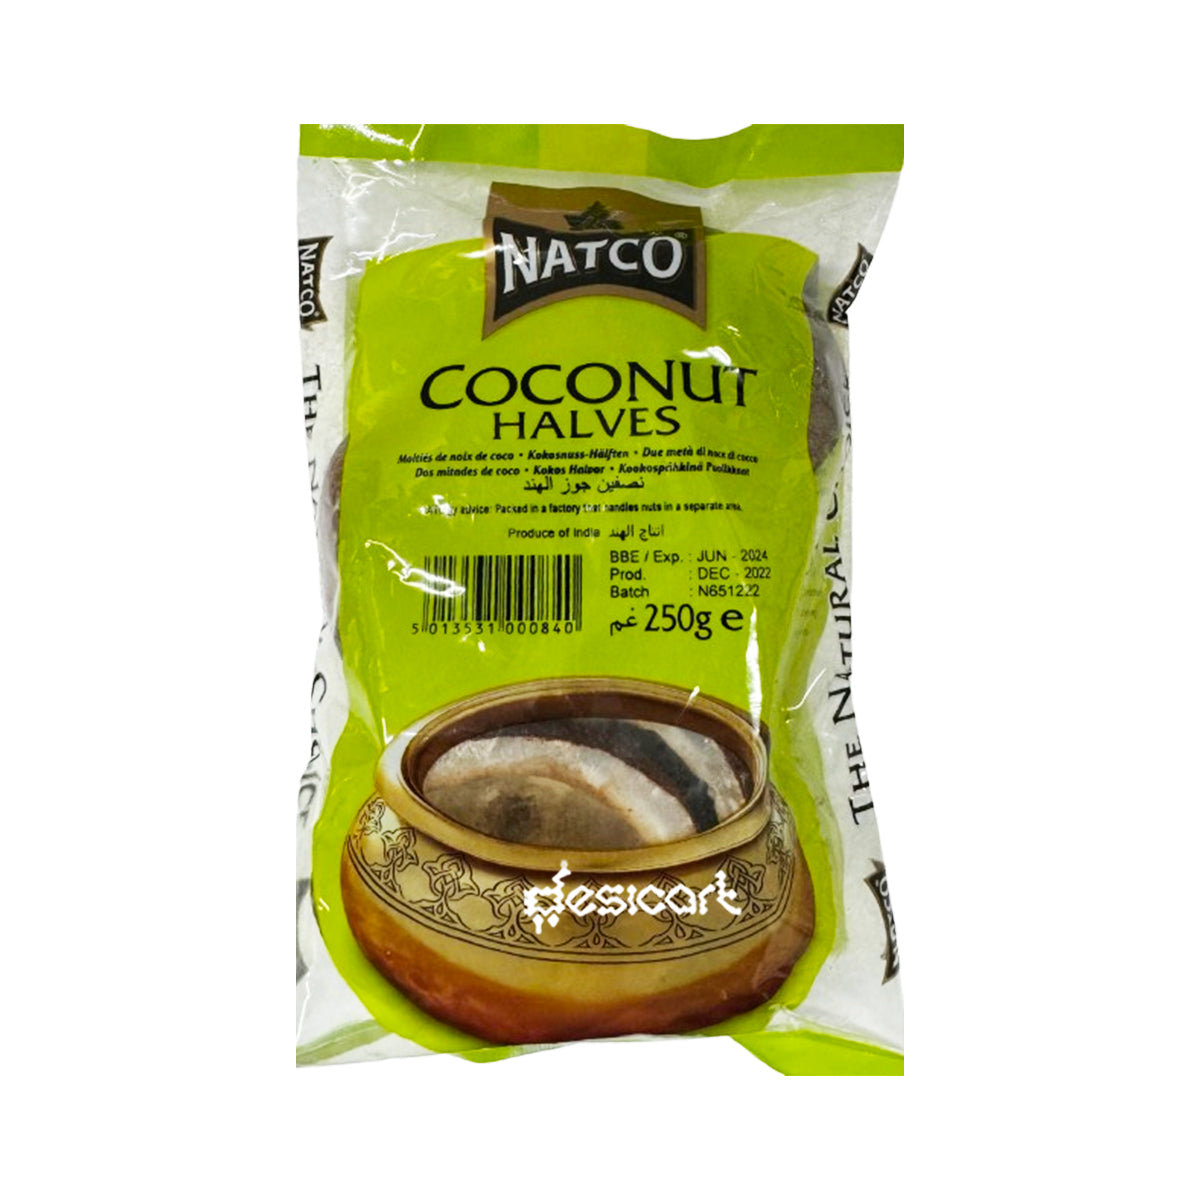 NATCO COCONUT HALVES 250G